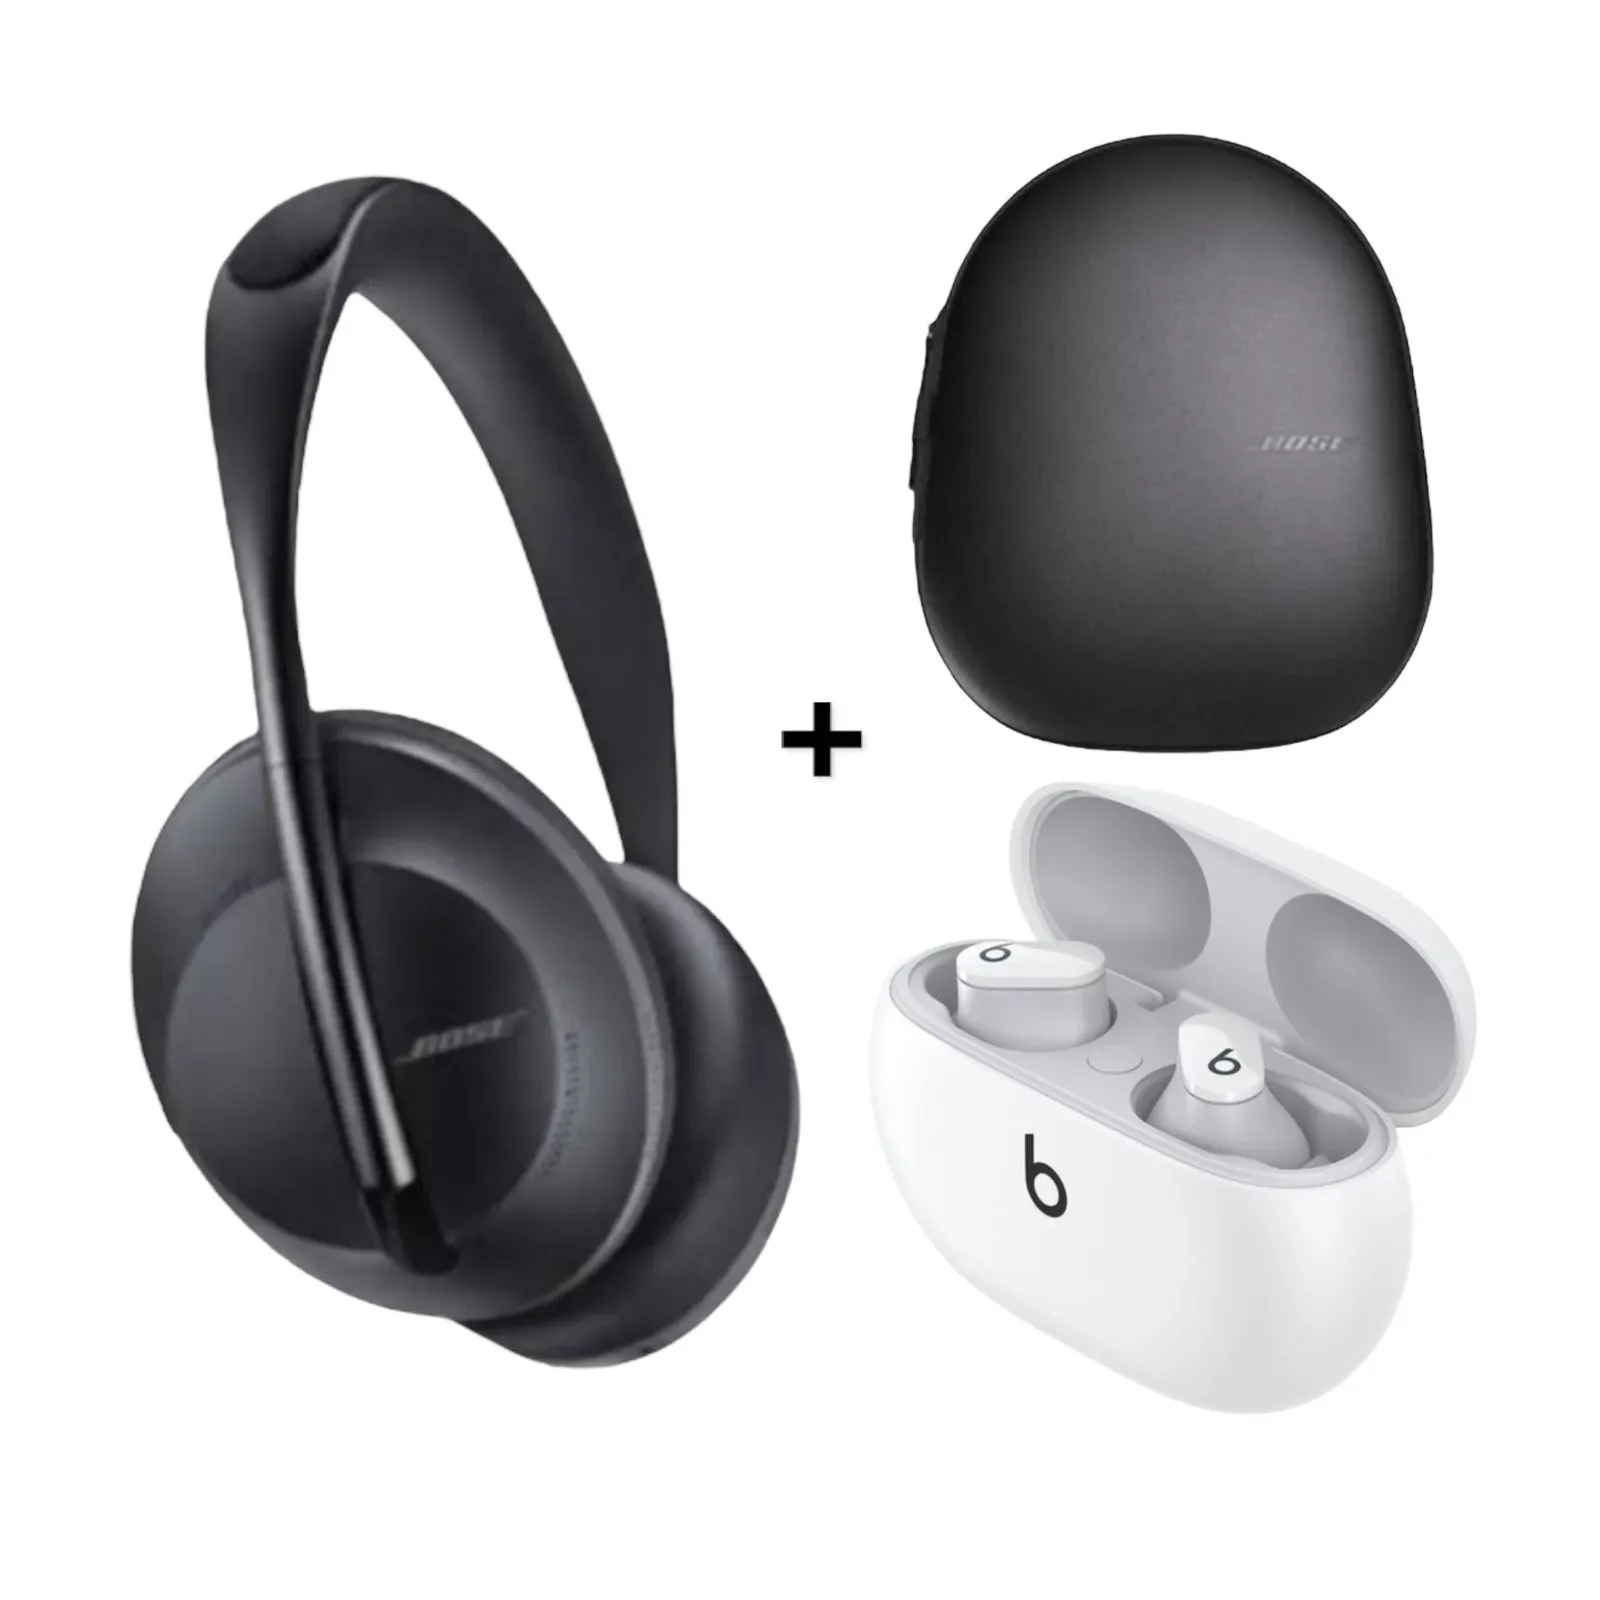 Audifonos Bluetooth Beats + Auriculares Bluetooth Tipo Bose 700